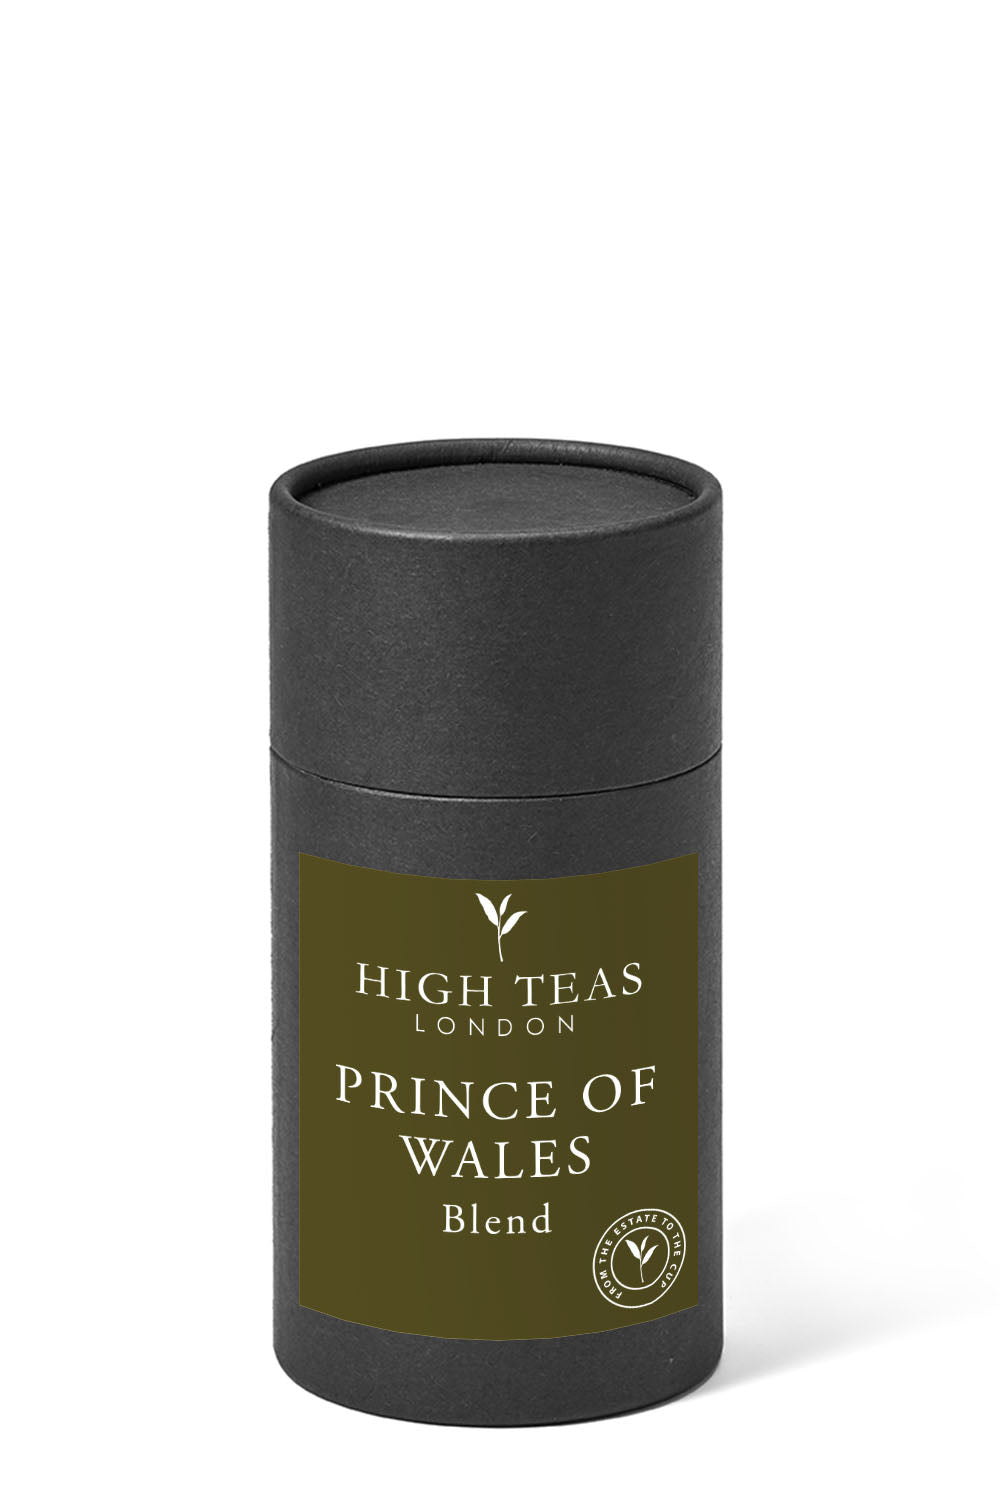 Prince of Wales-60g gift-Loose Leaf Tea-High Teas